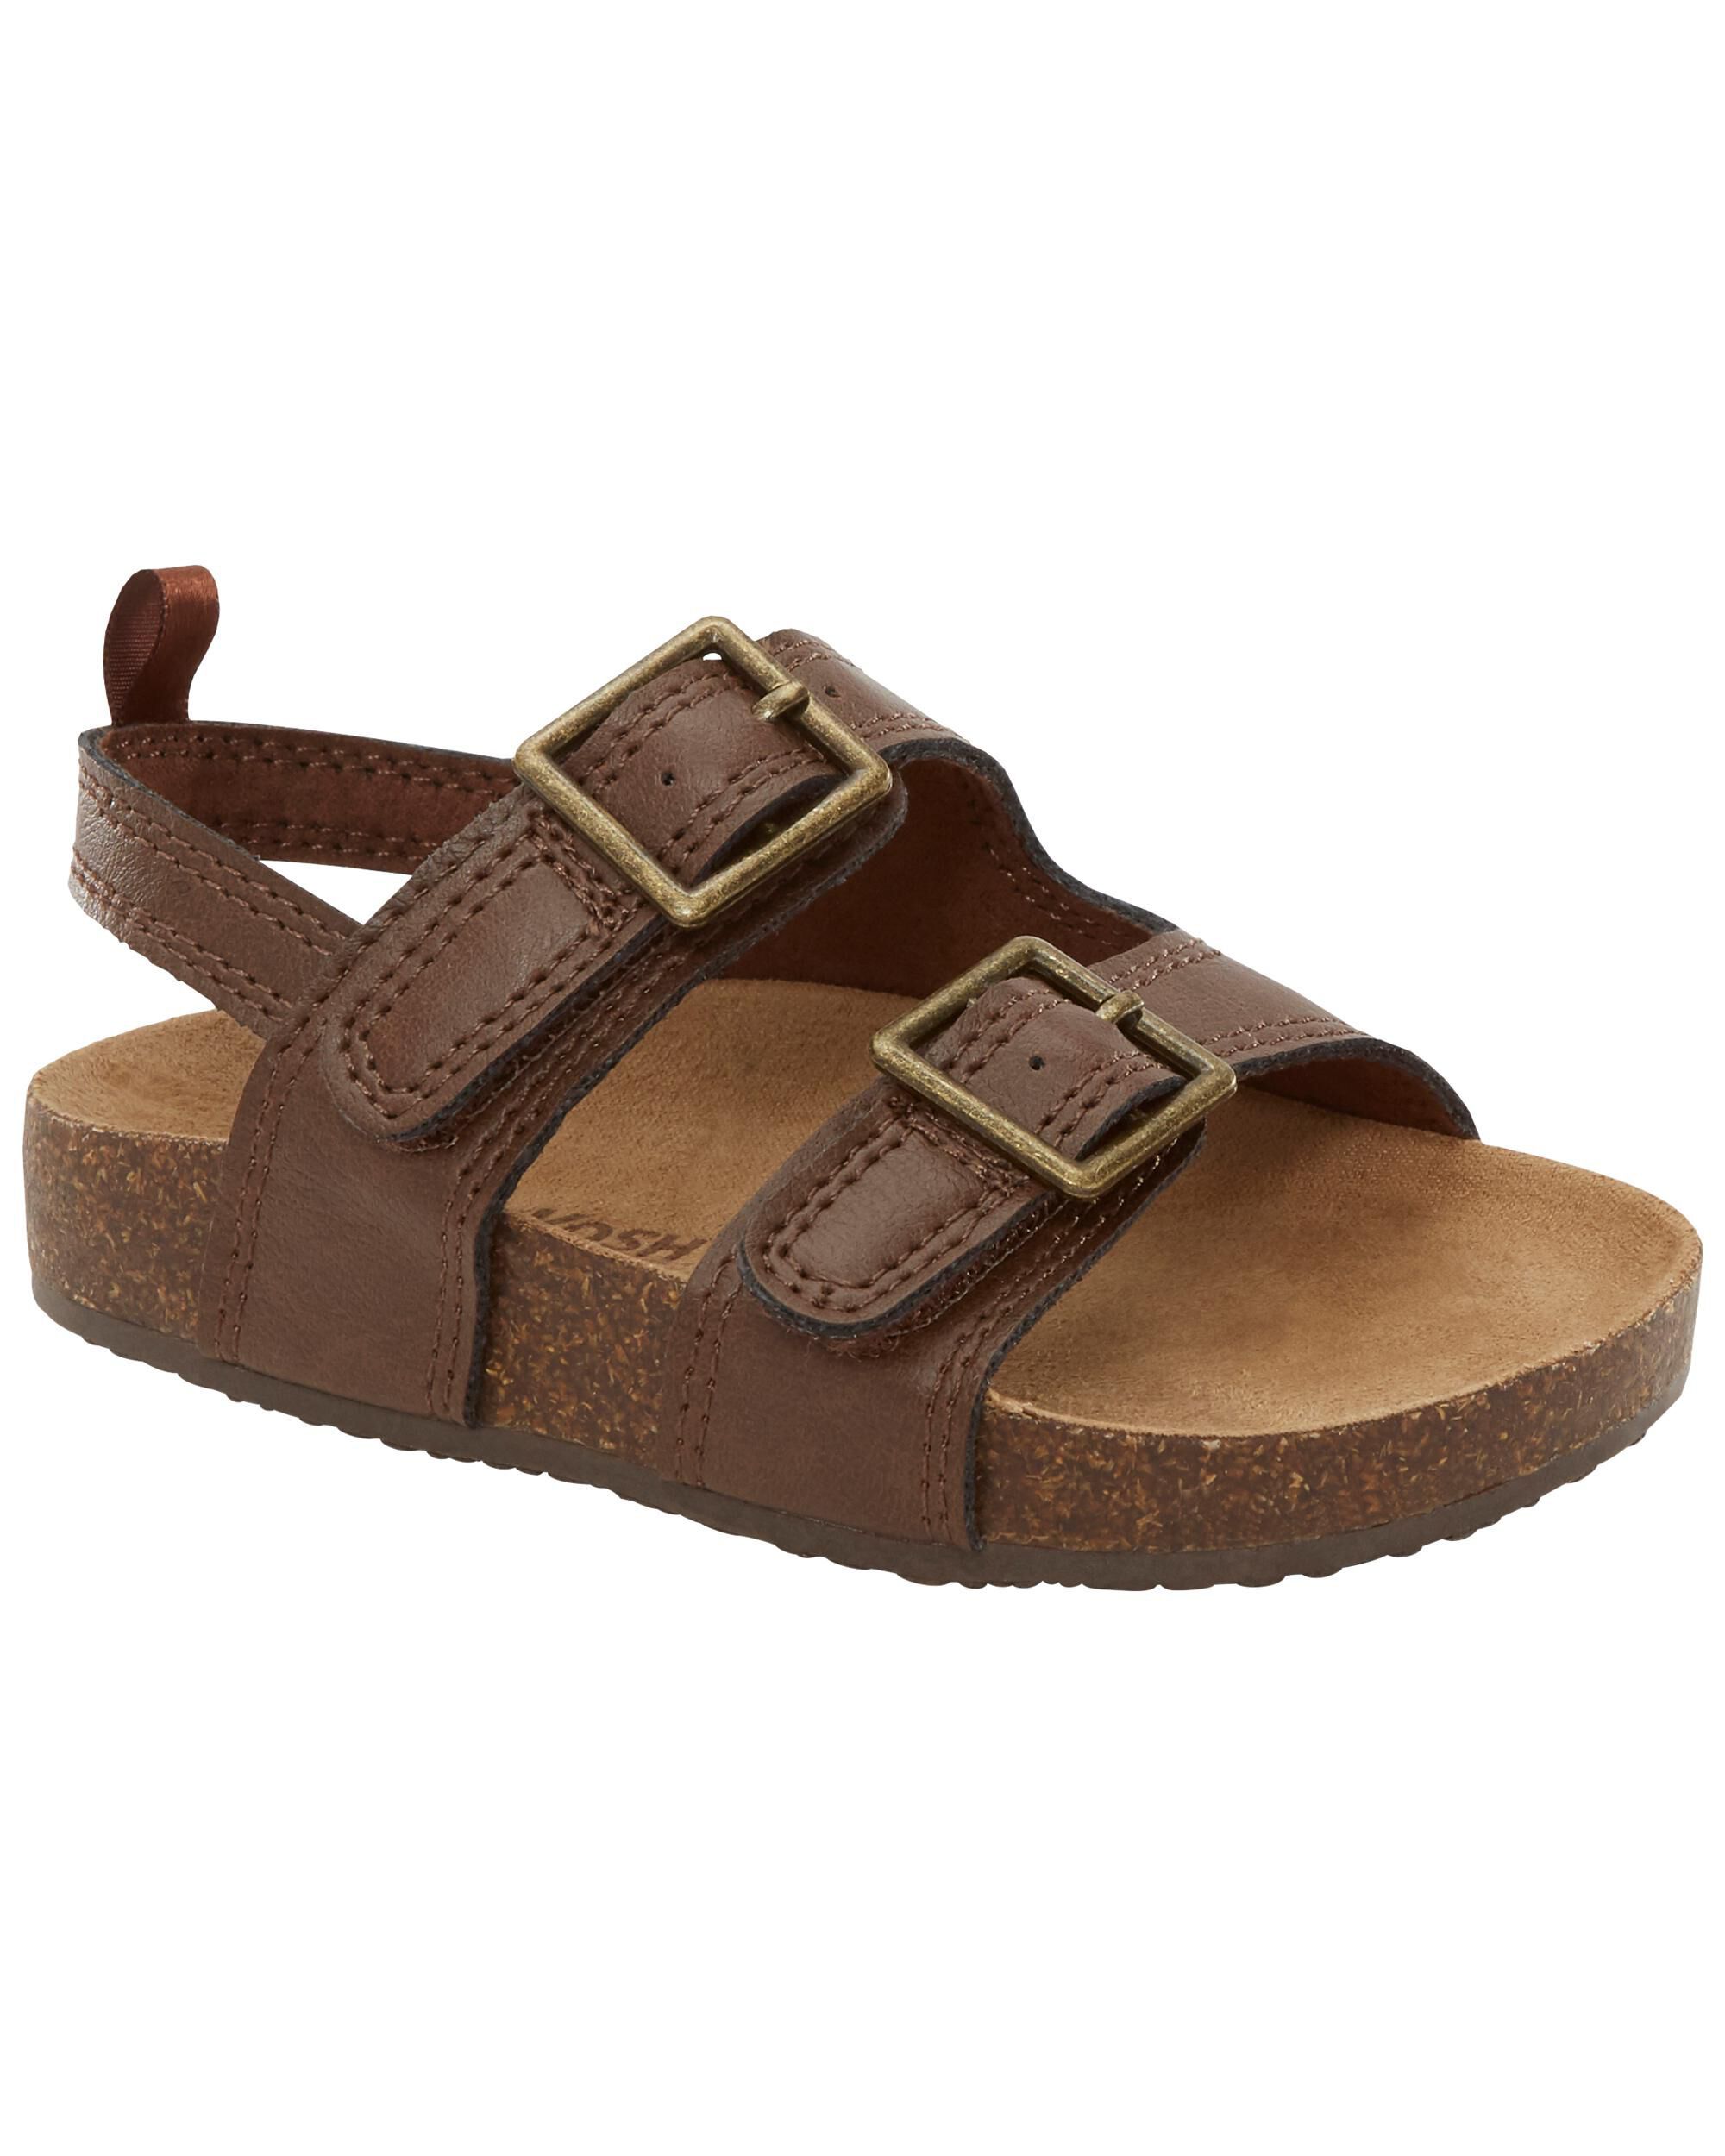 Brown Toddler Faux Cork Sandals | carters.com | Carter's